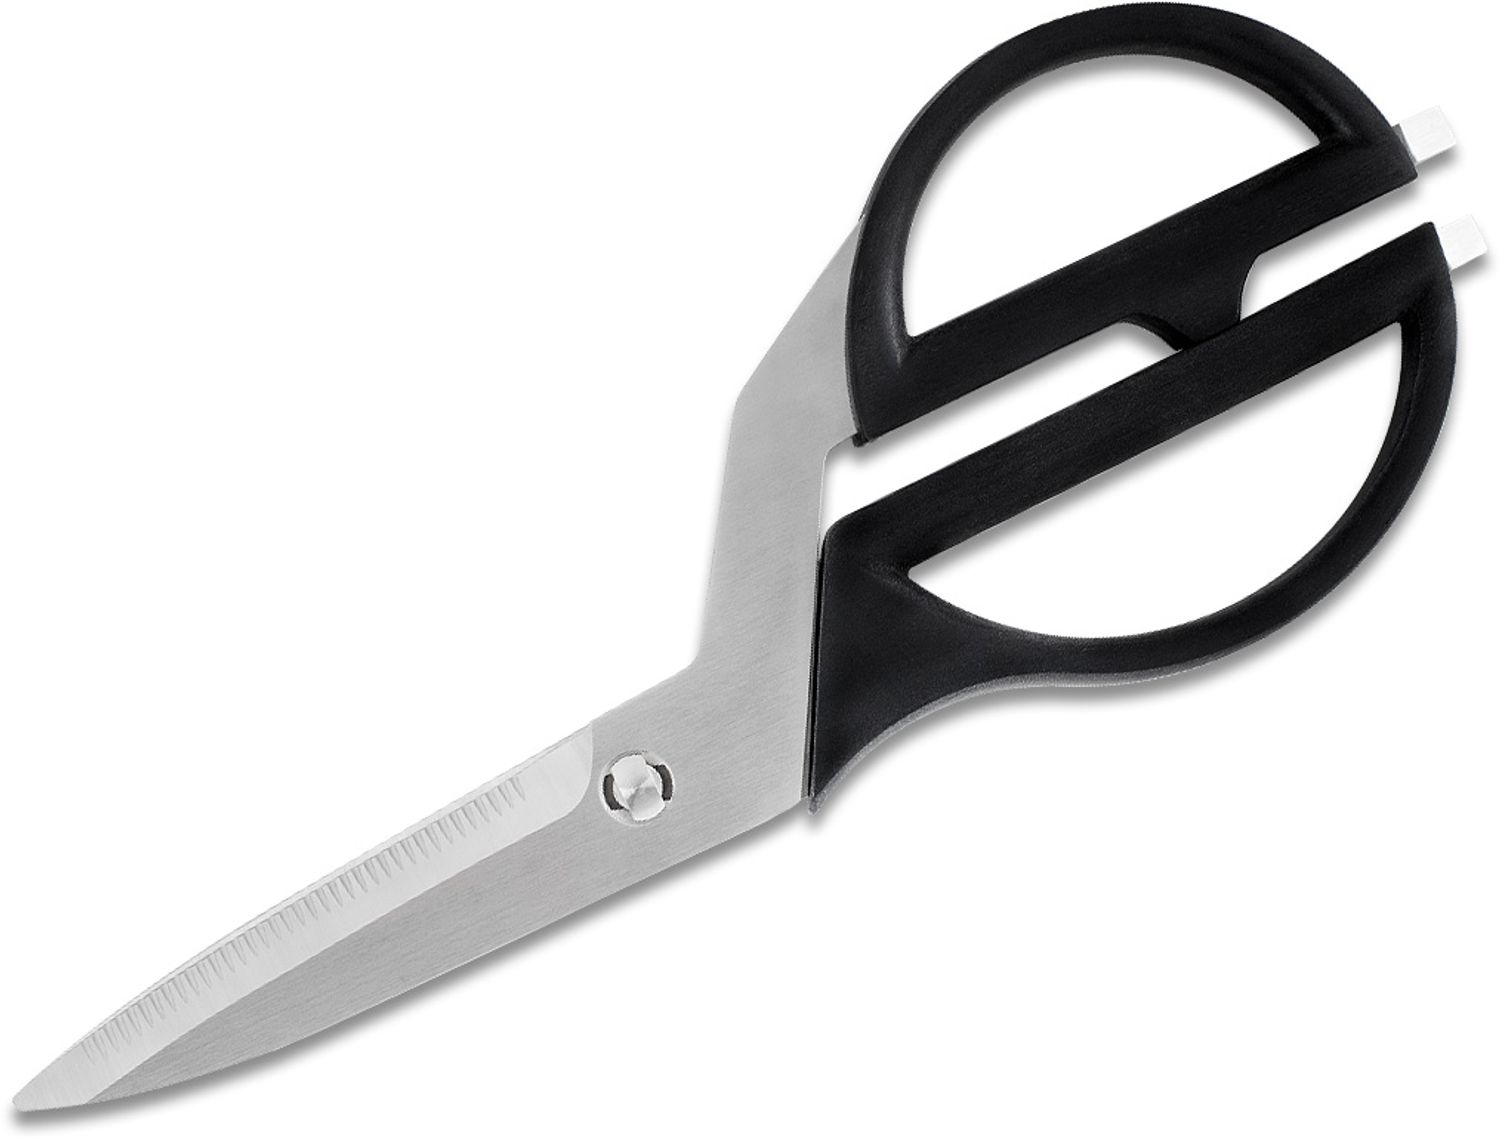 KAI® PureKomachi2 7-3/8 Kitchen Scissors - Stainless Steel Shears